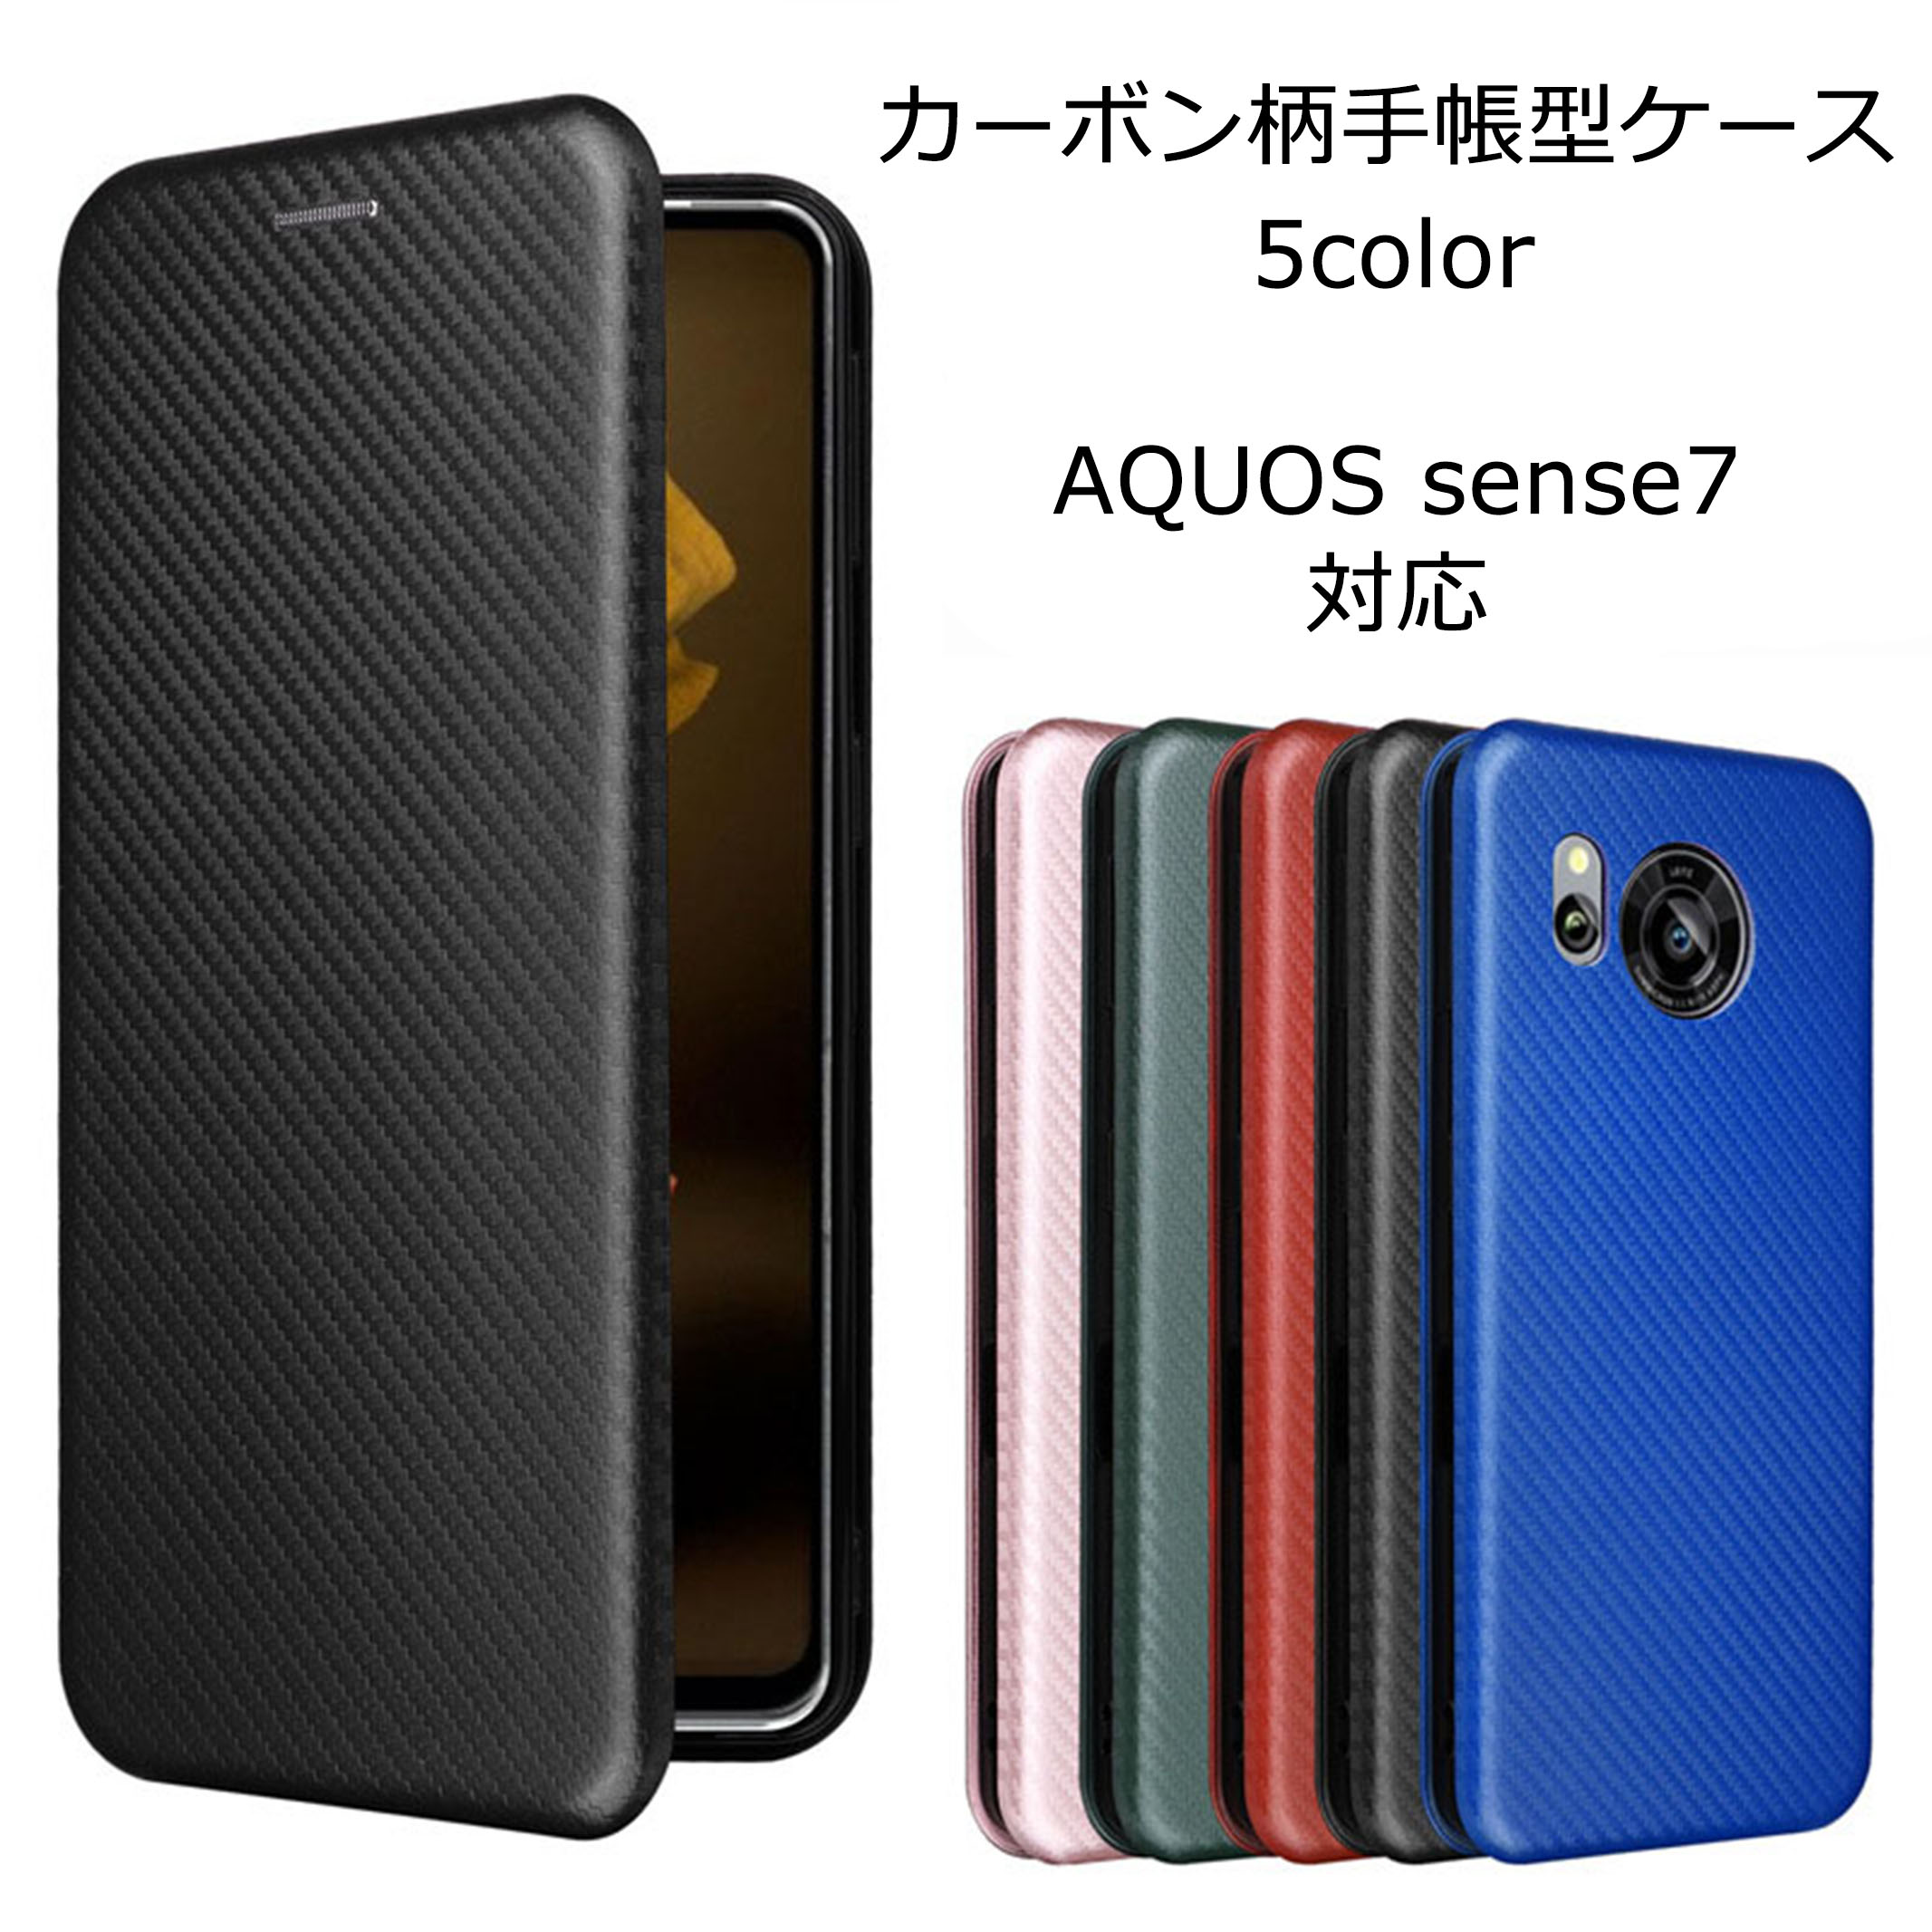 AQUOS sense7 実用性 耐水 アクオス 手帳型 ケース 黒色 ブラック